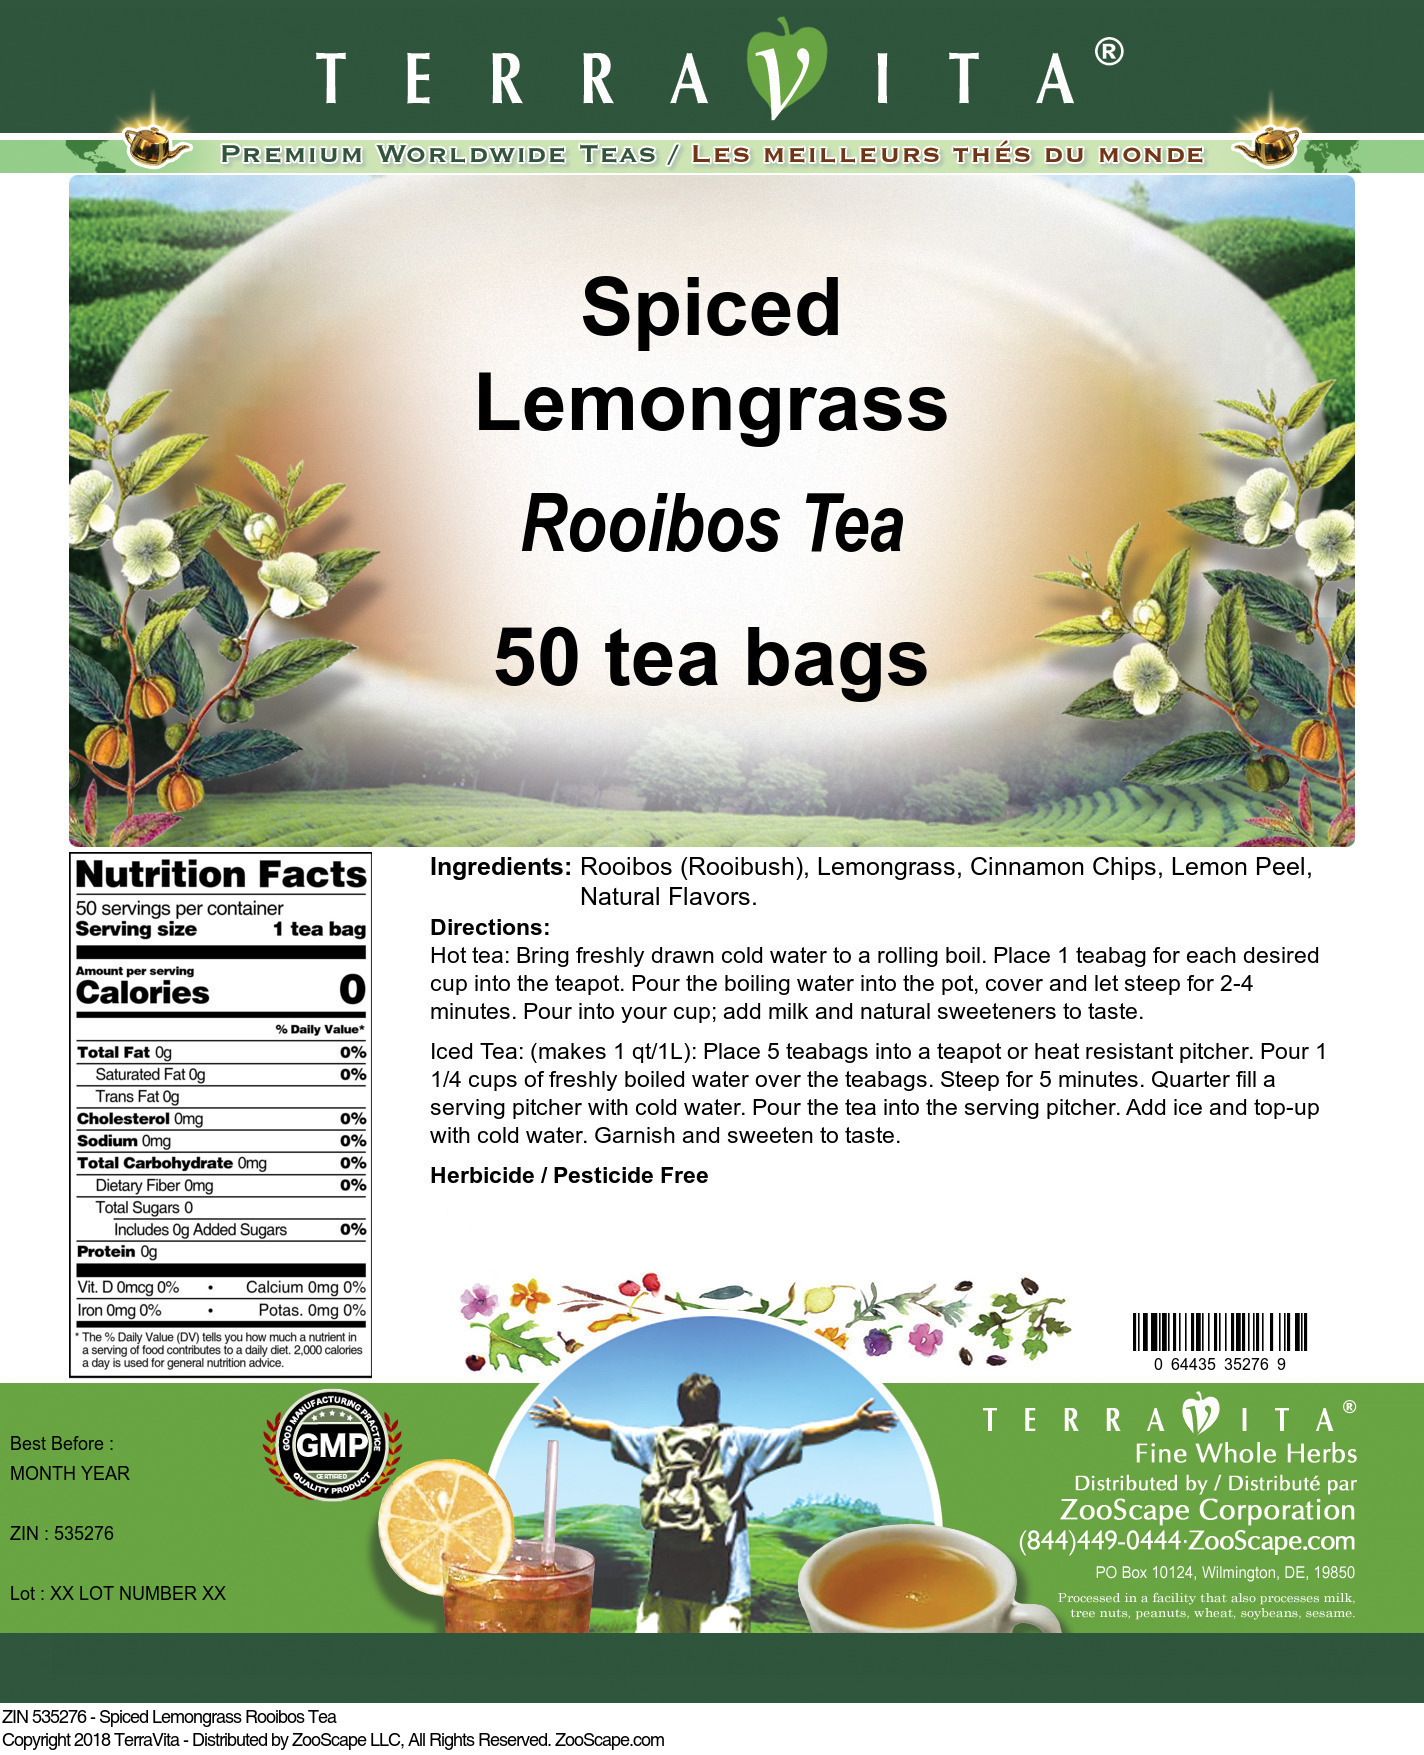 Spiced Lemongrass Rooibos Tea - Label